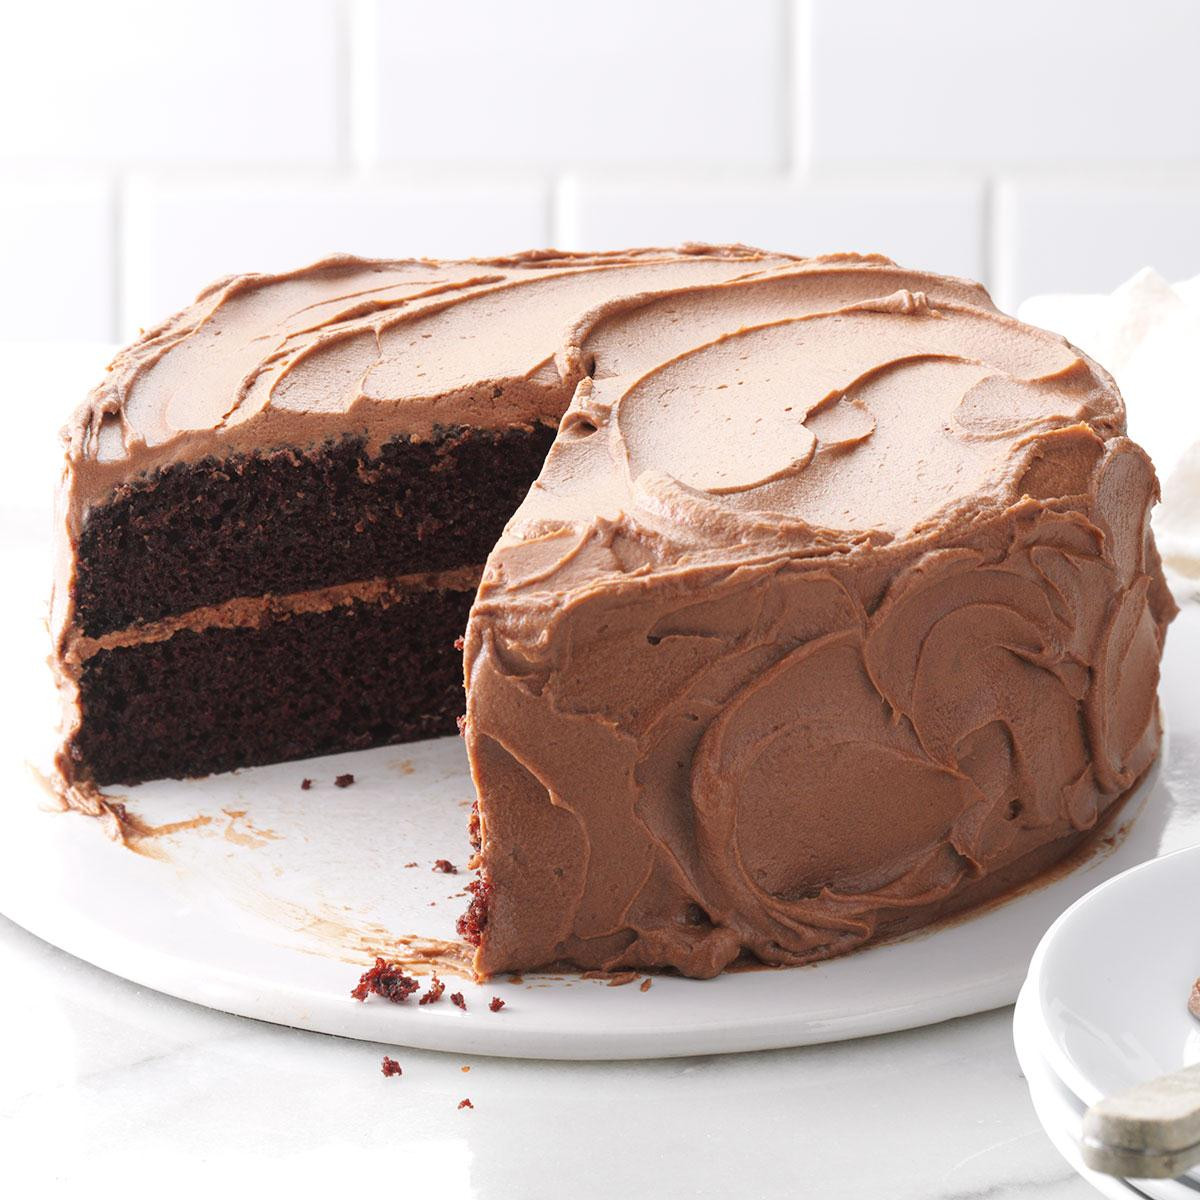 Taste Of Home Chocolate Cake
 Chocolate Cake with Chocolate Frosting Recipe